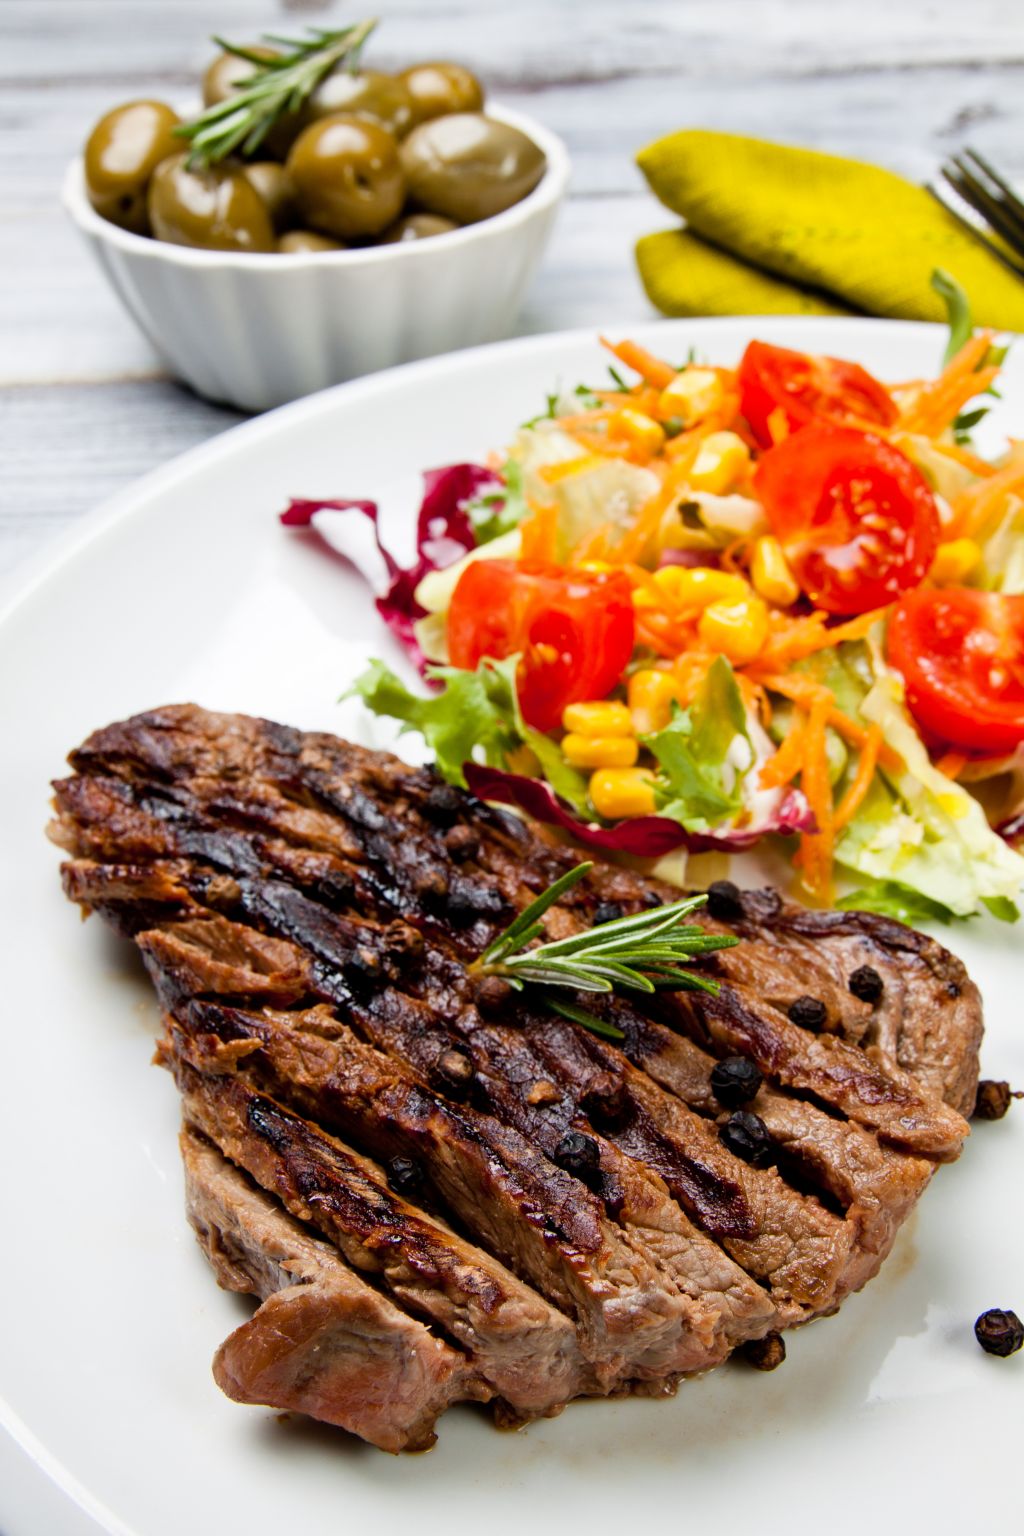 un plat garni : un bifteck et une salade